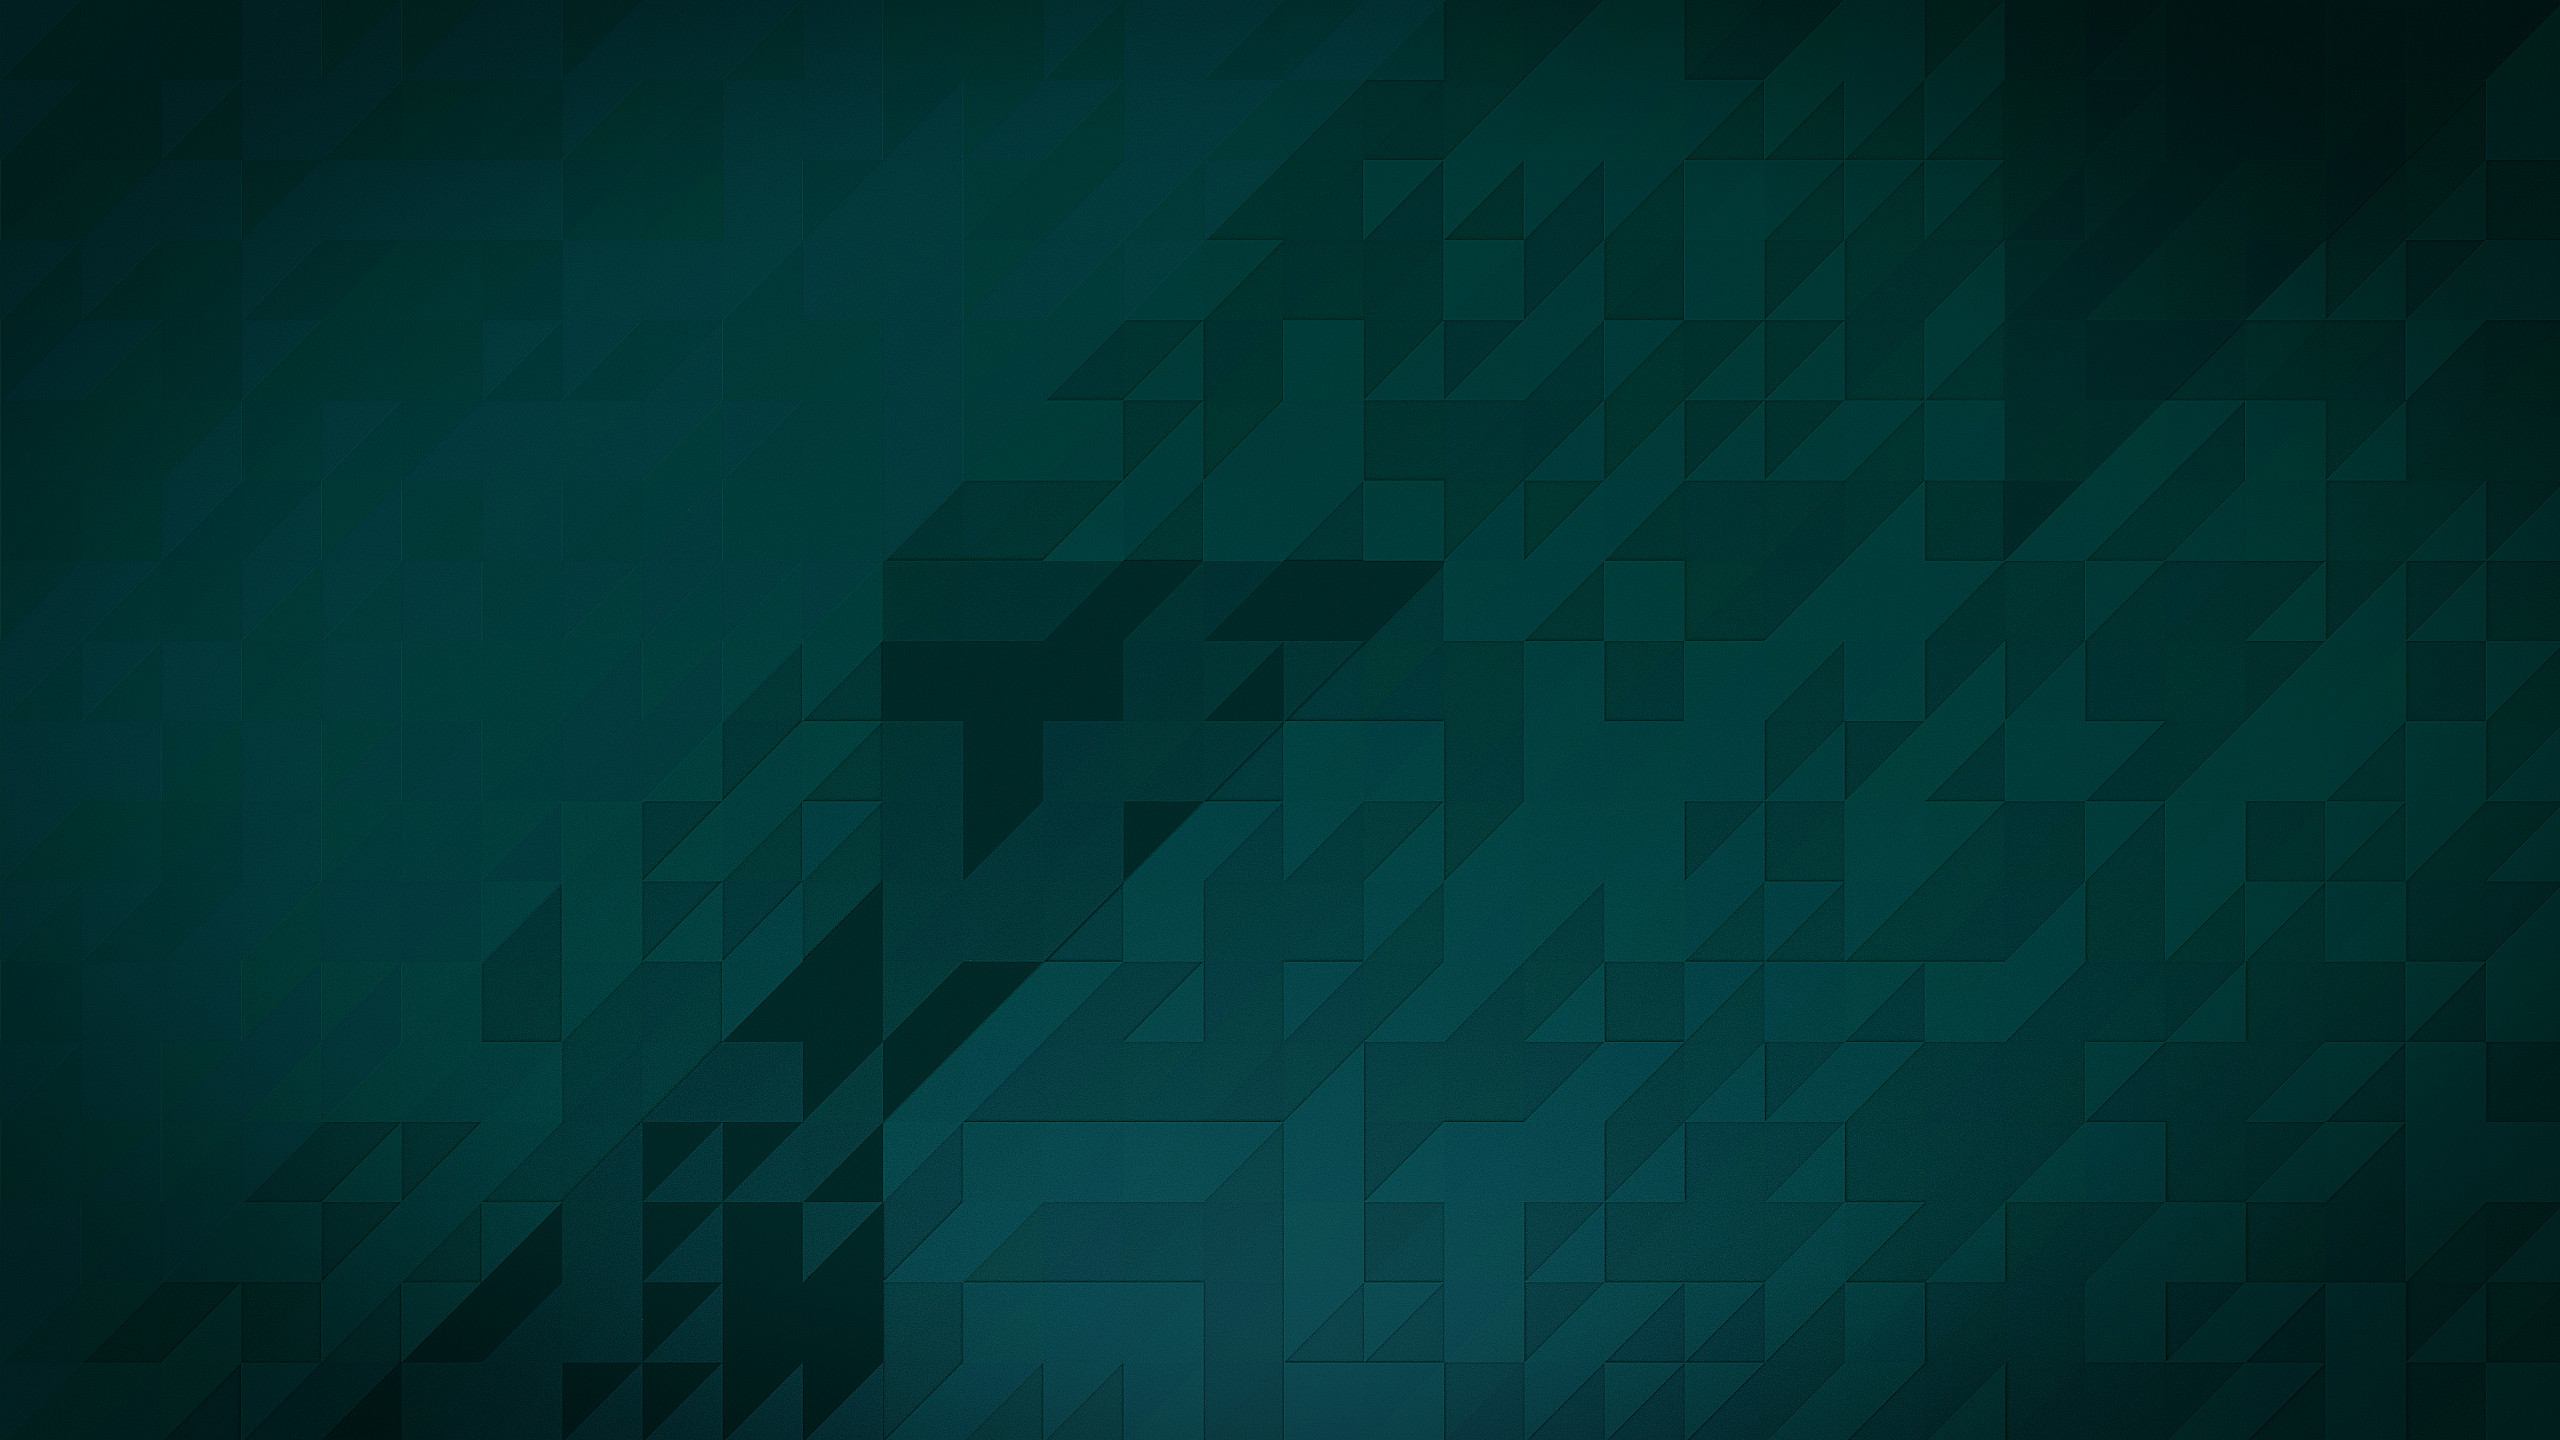 Linux Mint Default Wallpaper Pack by LYC4NR0C on DeviantArt